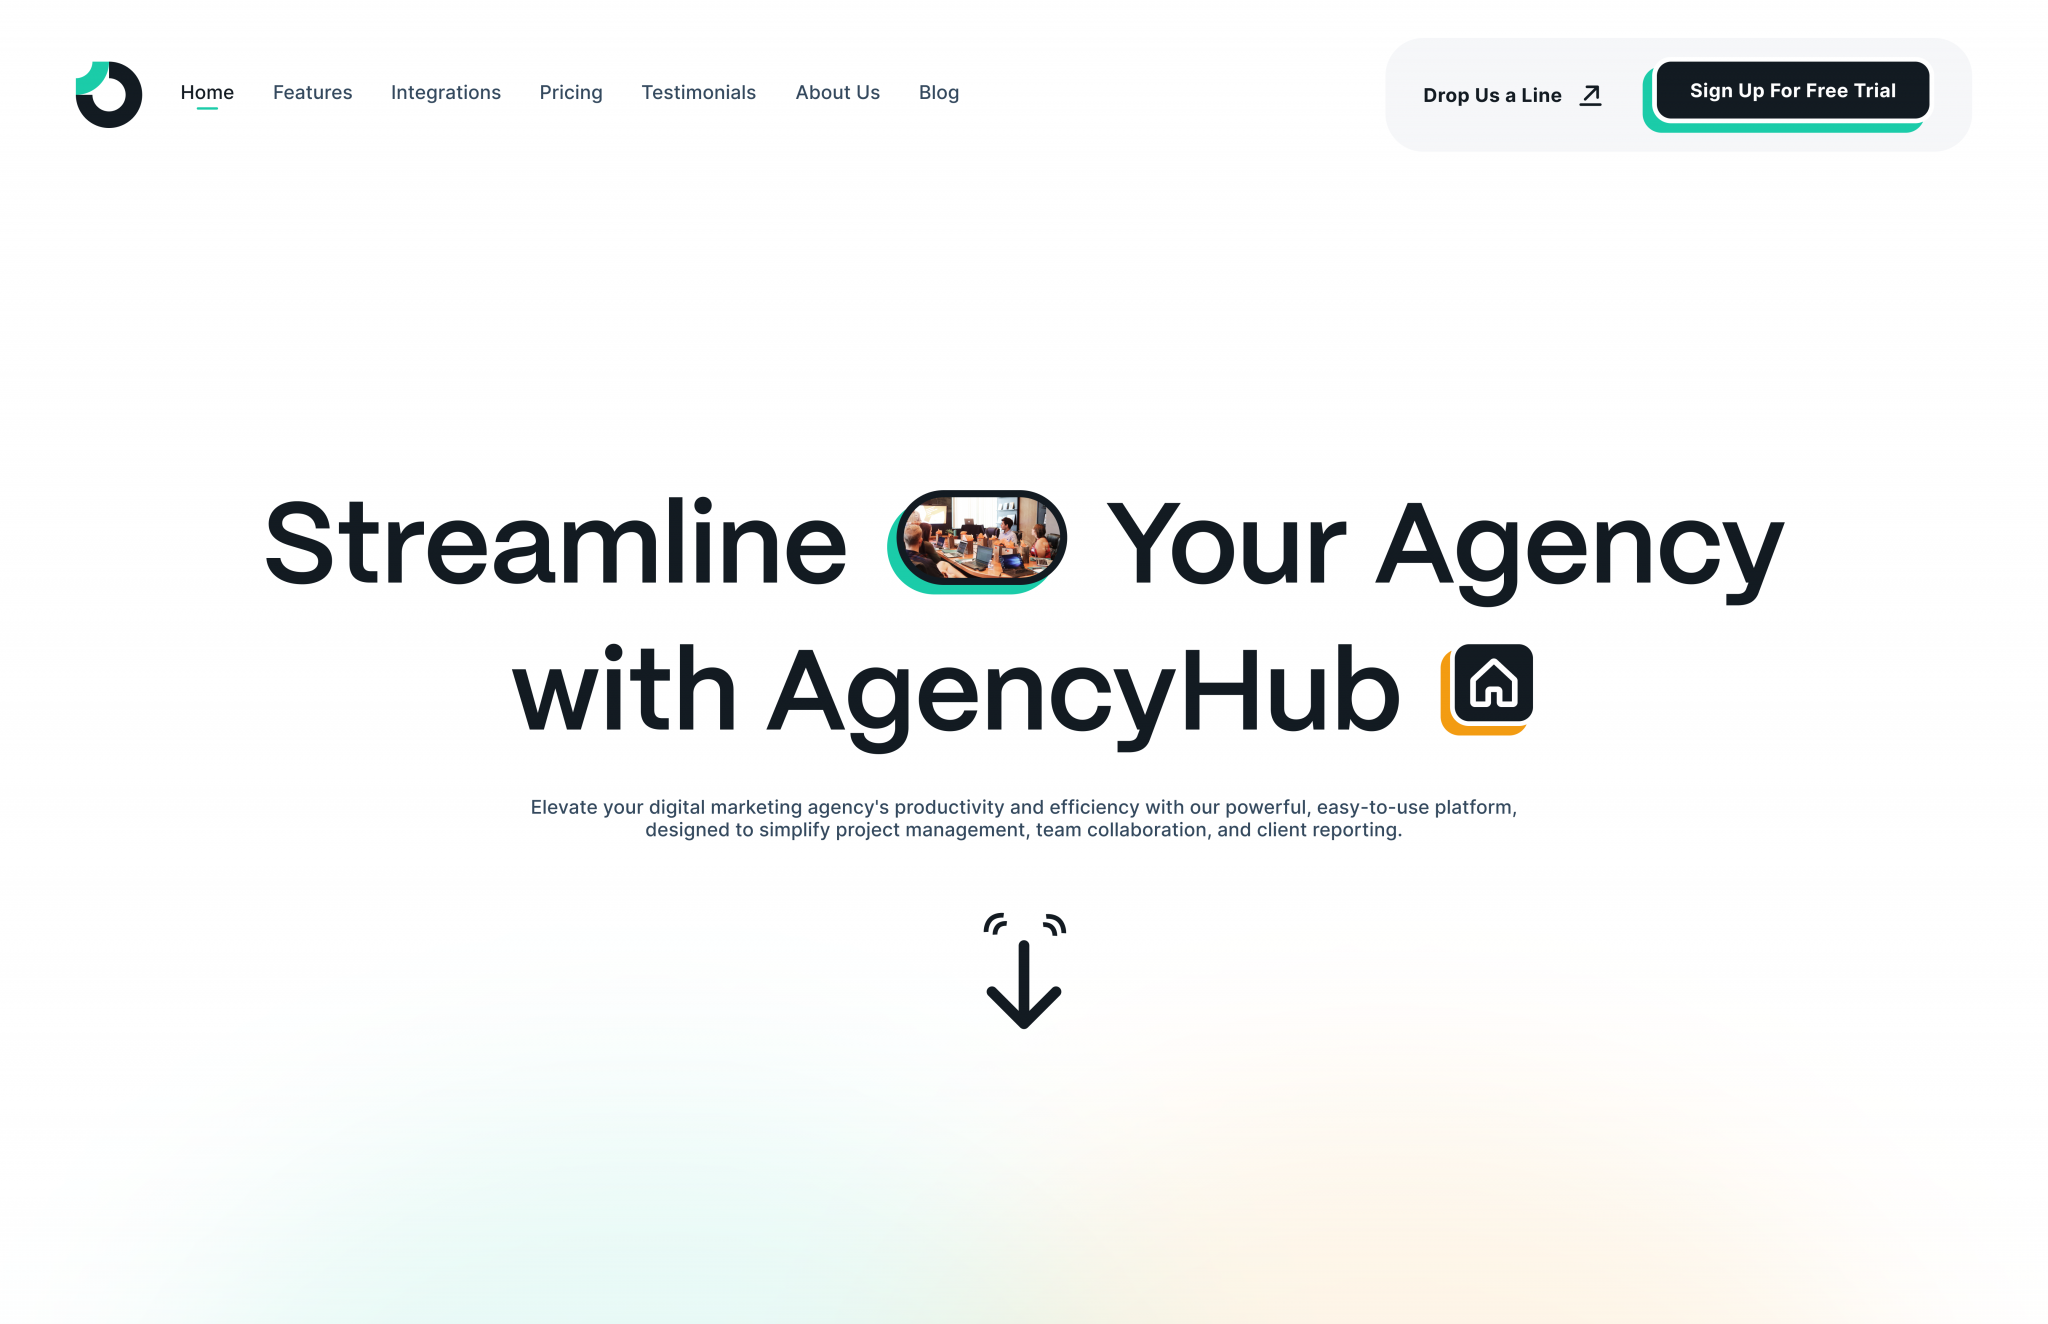 AgencyHub